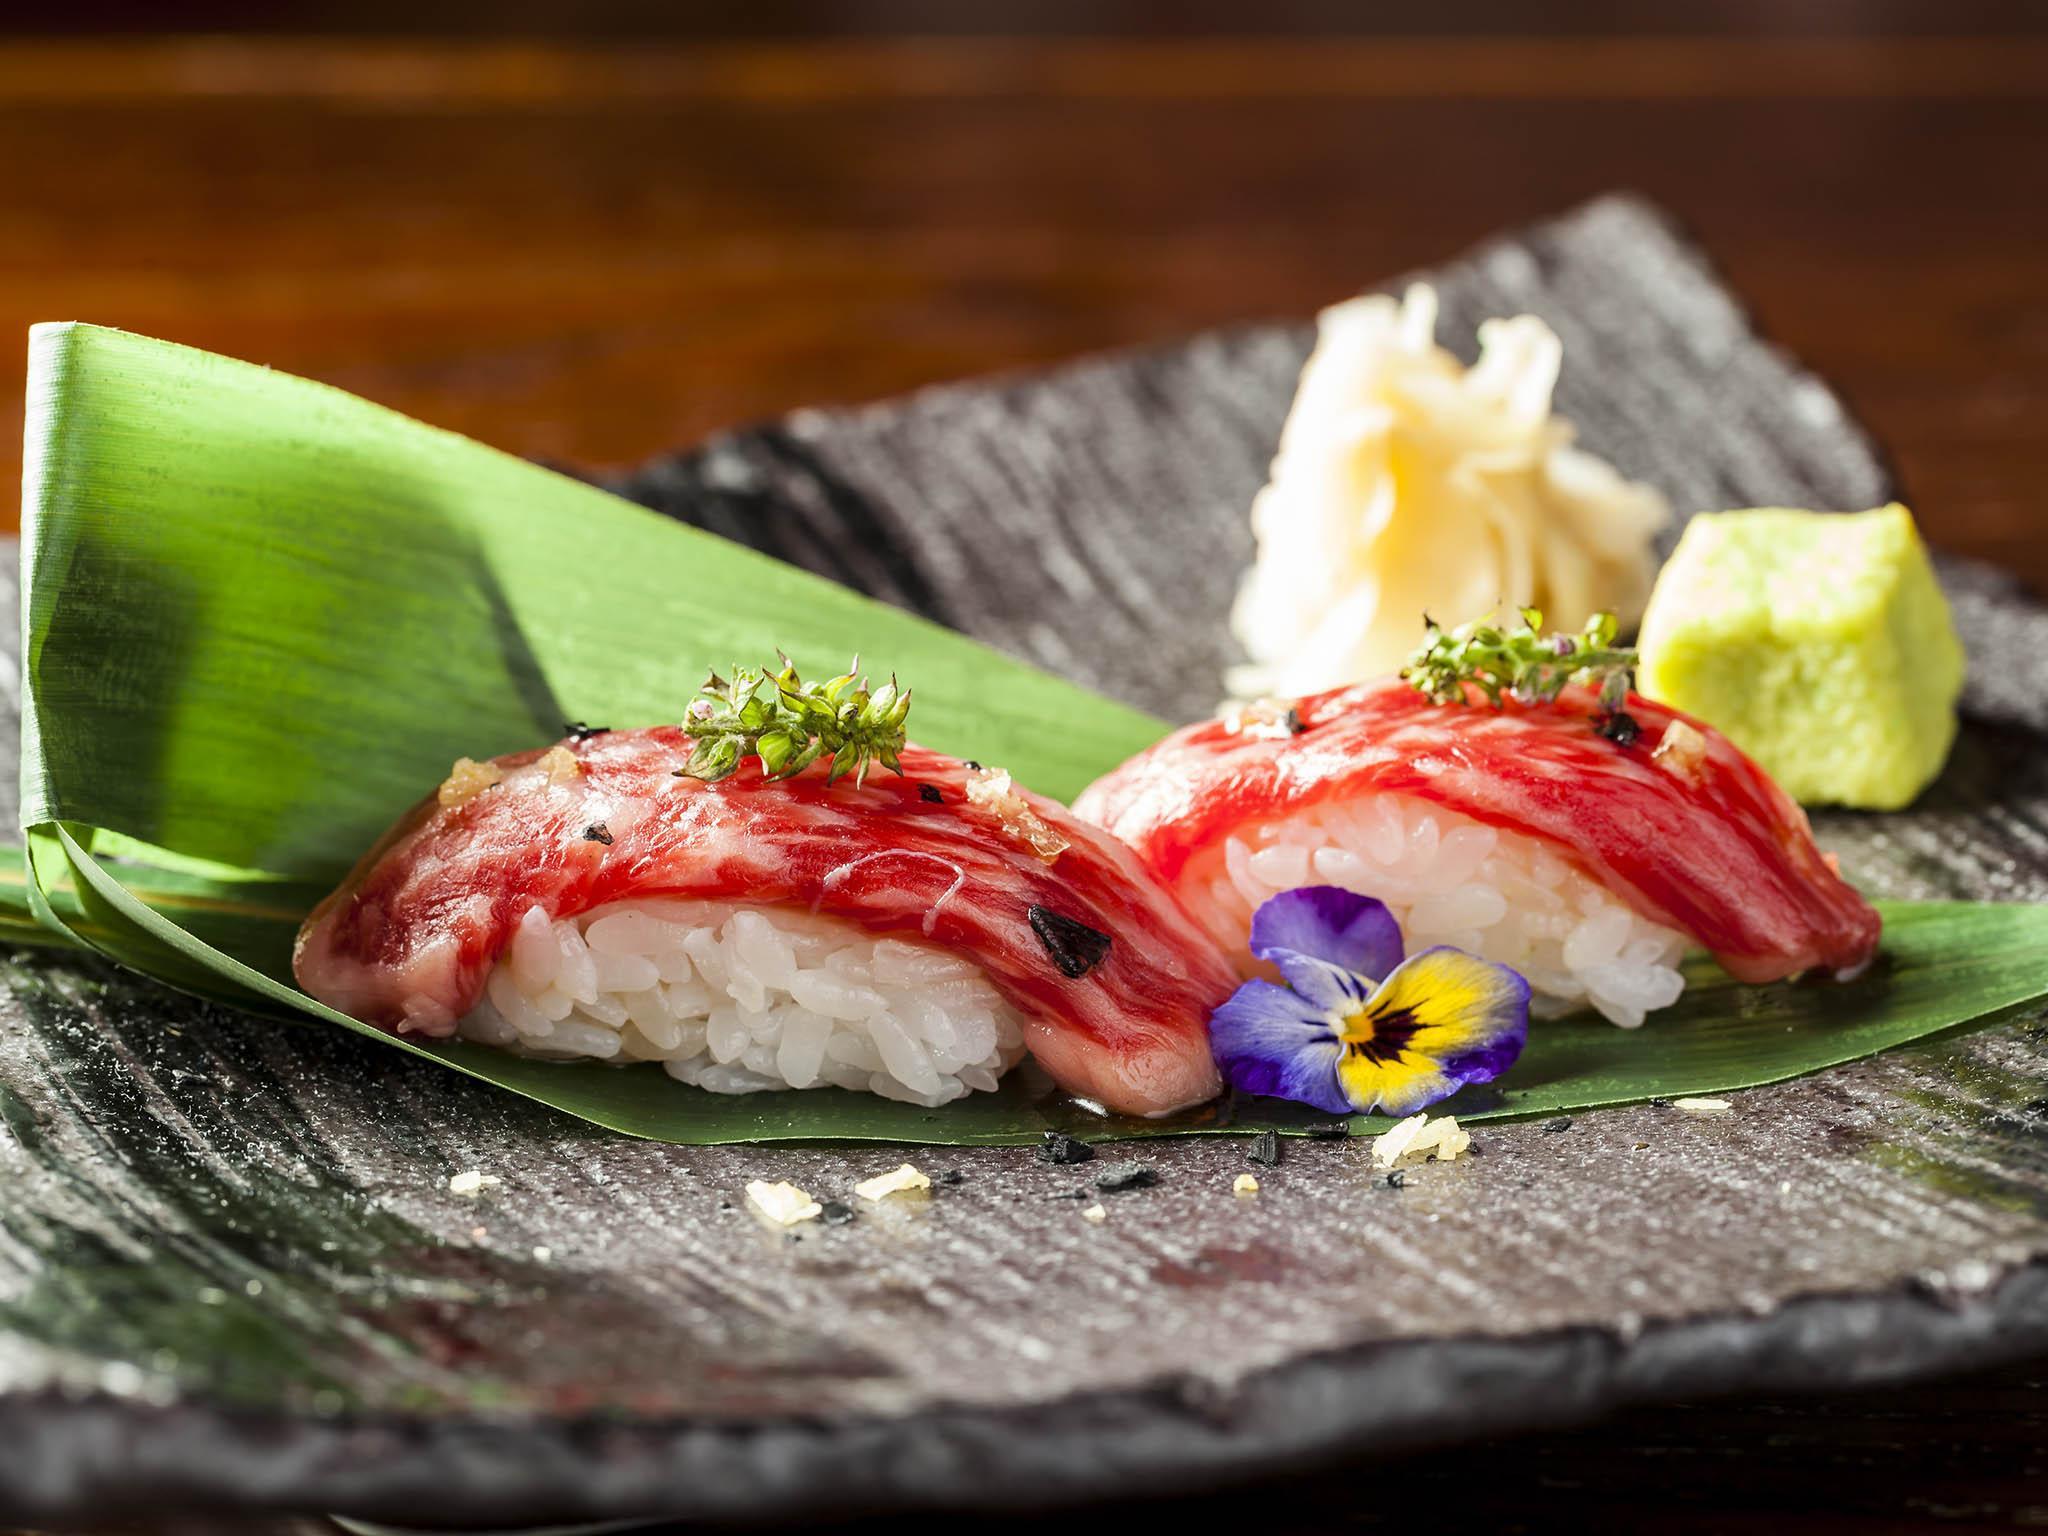 A kobe nigiri from Sushisamba in London – sushi’s been around since the time of the samurai